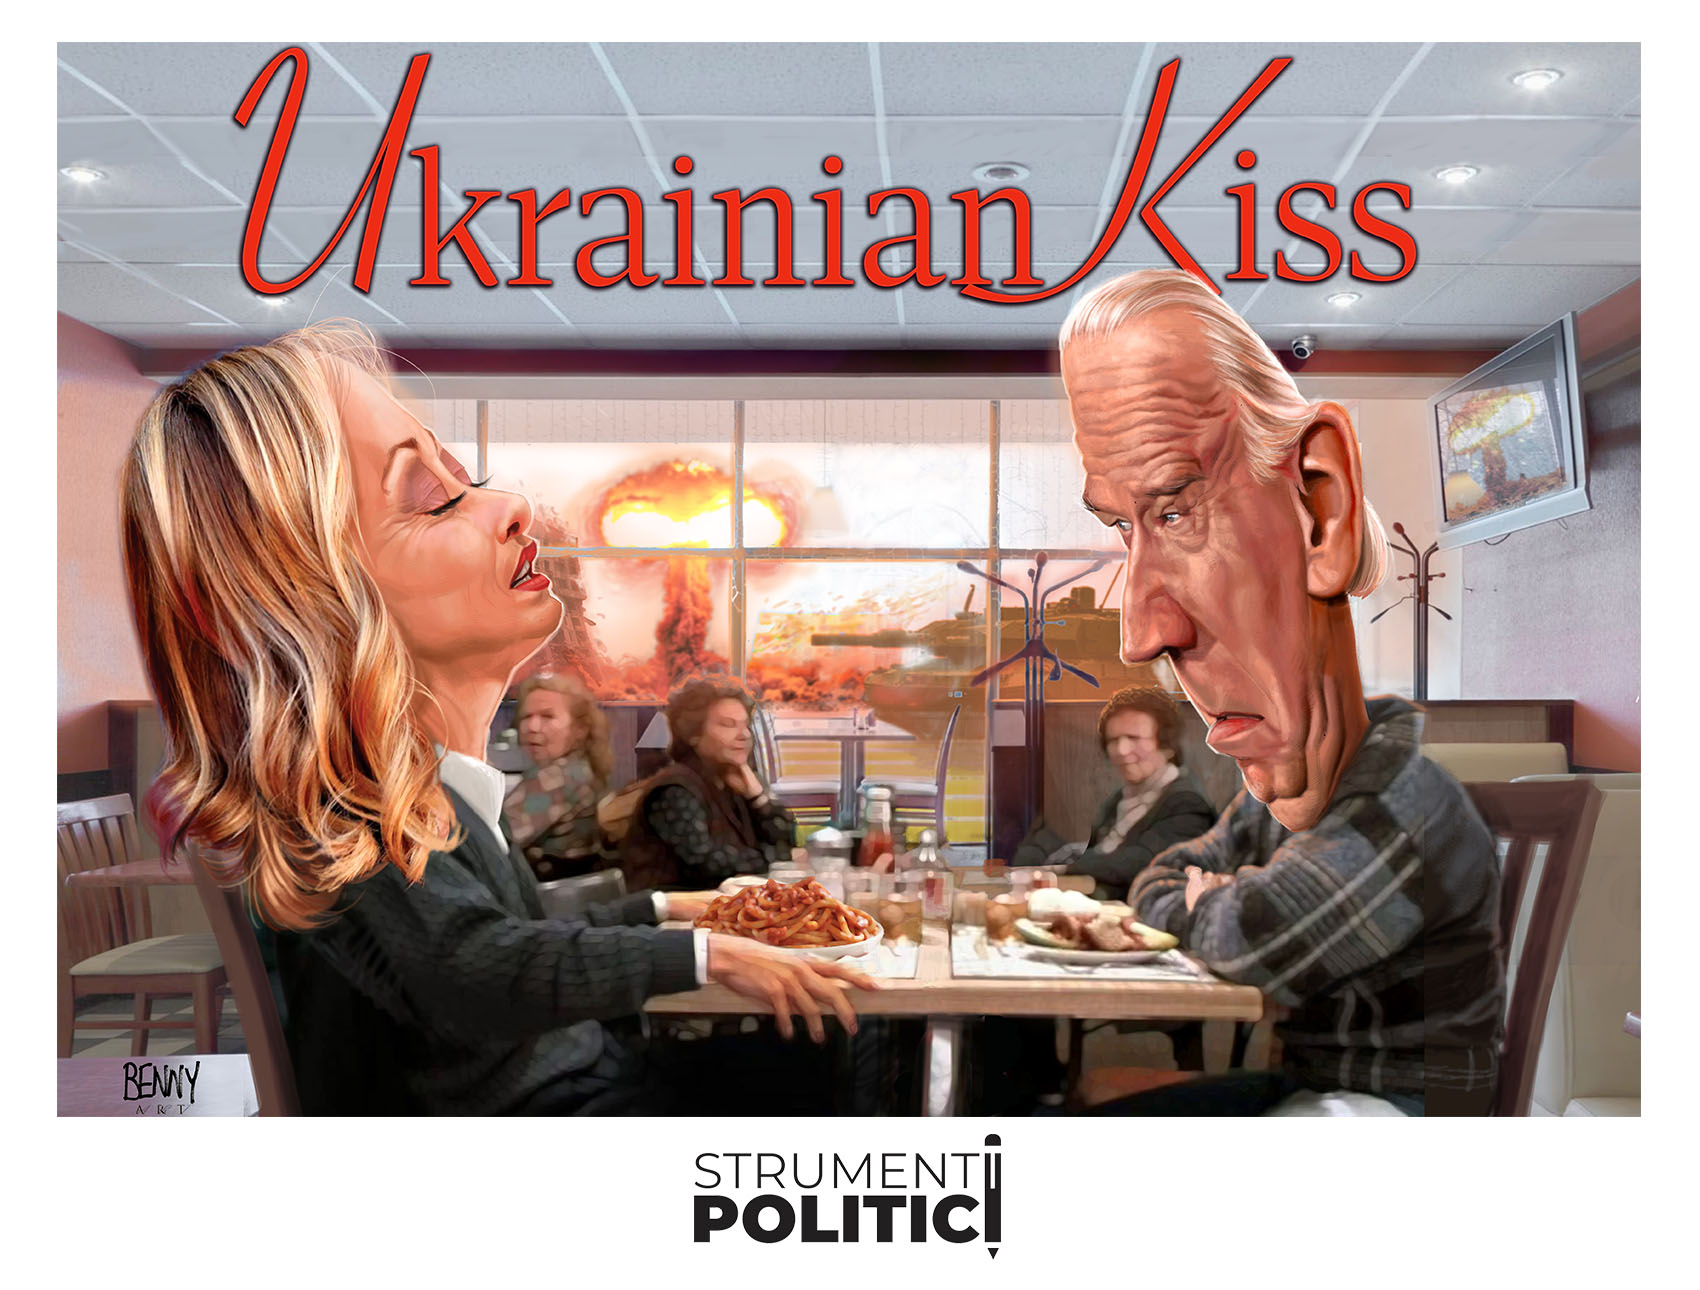 Prossimamente nei cinema “Ukrainian Kiss”. Cast: Joe Biden e Giorgia Meloni